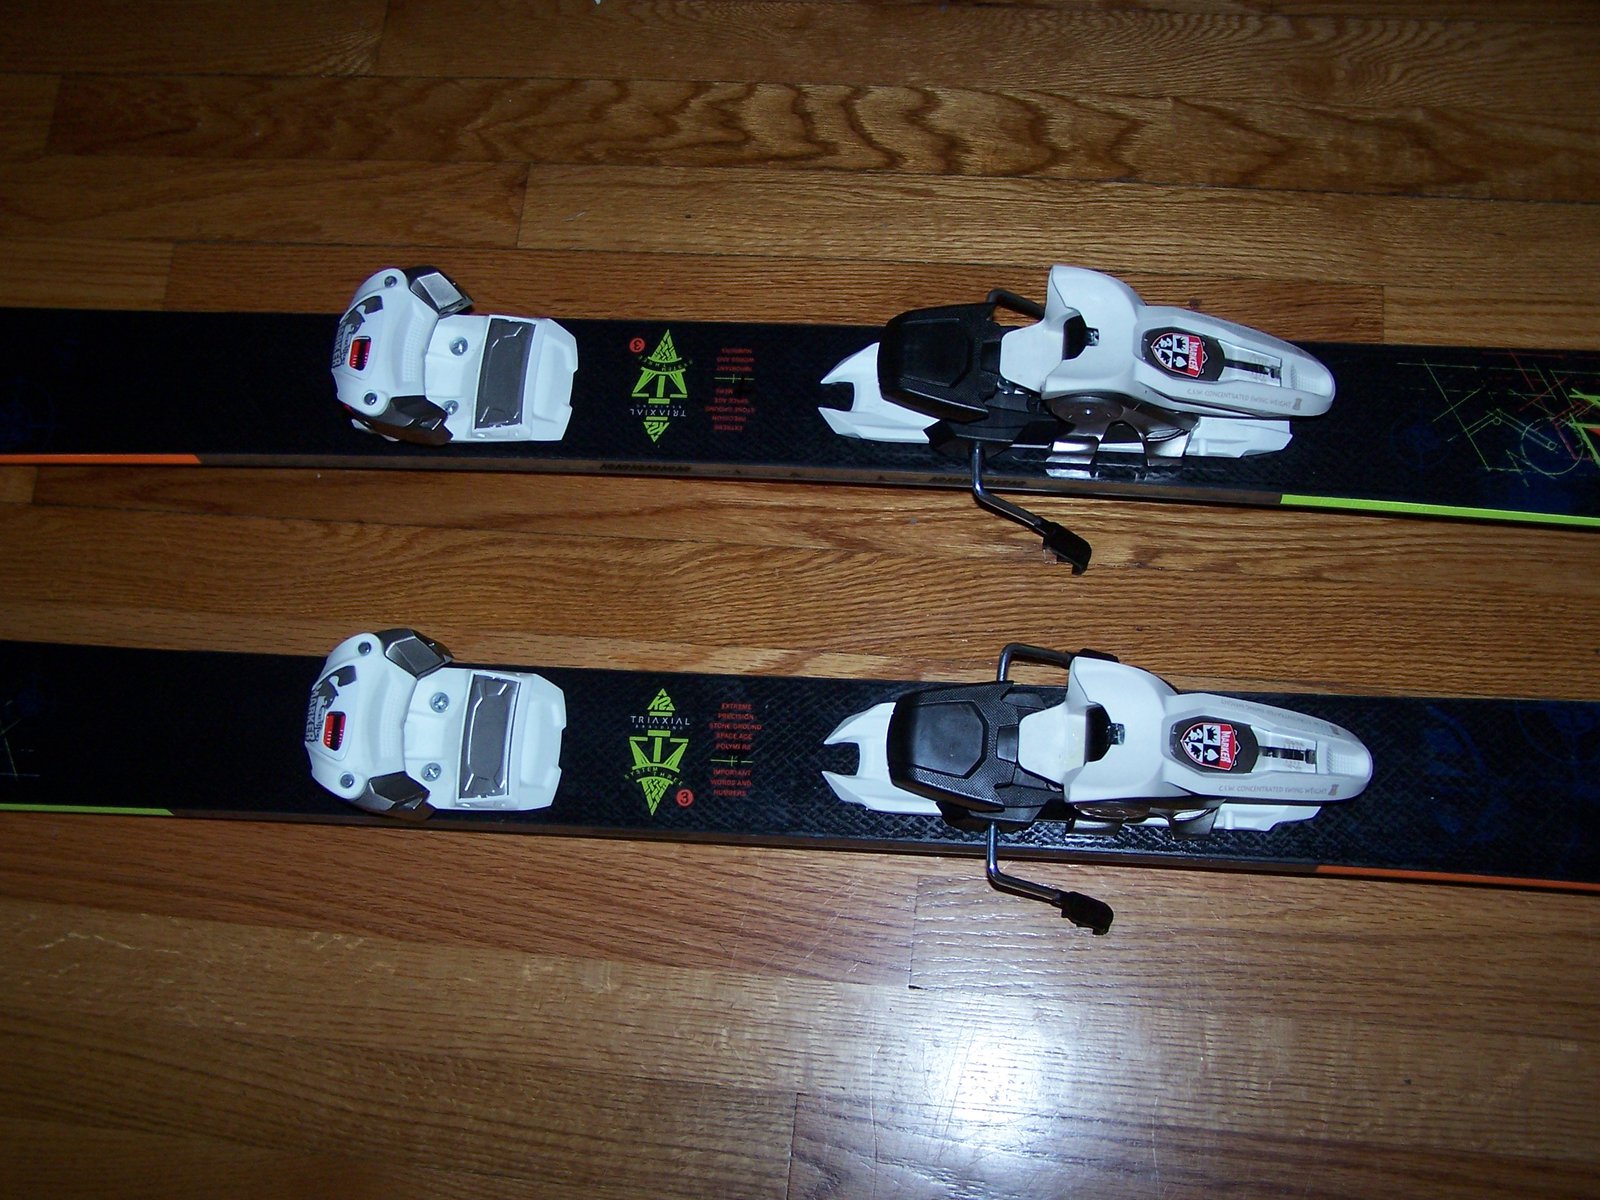 NEw skis